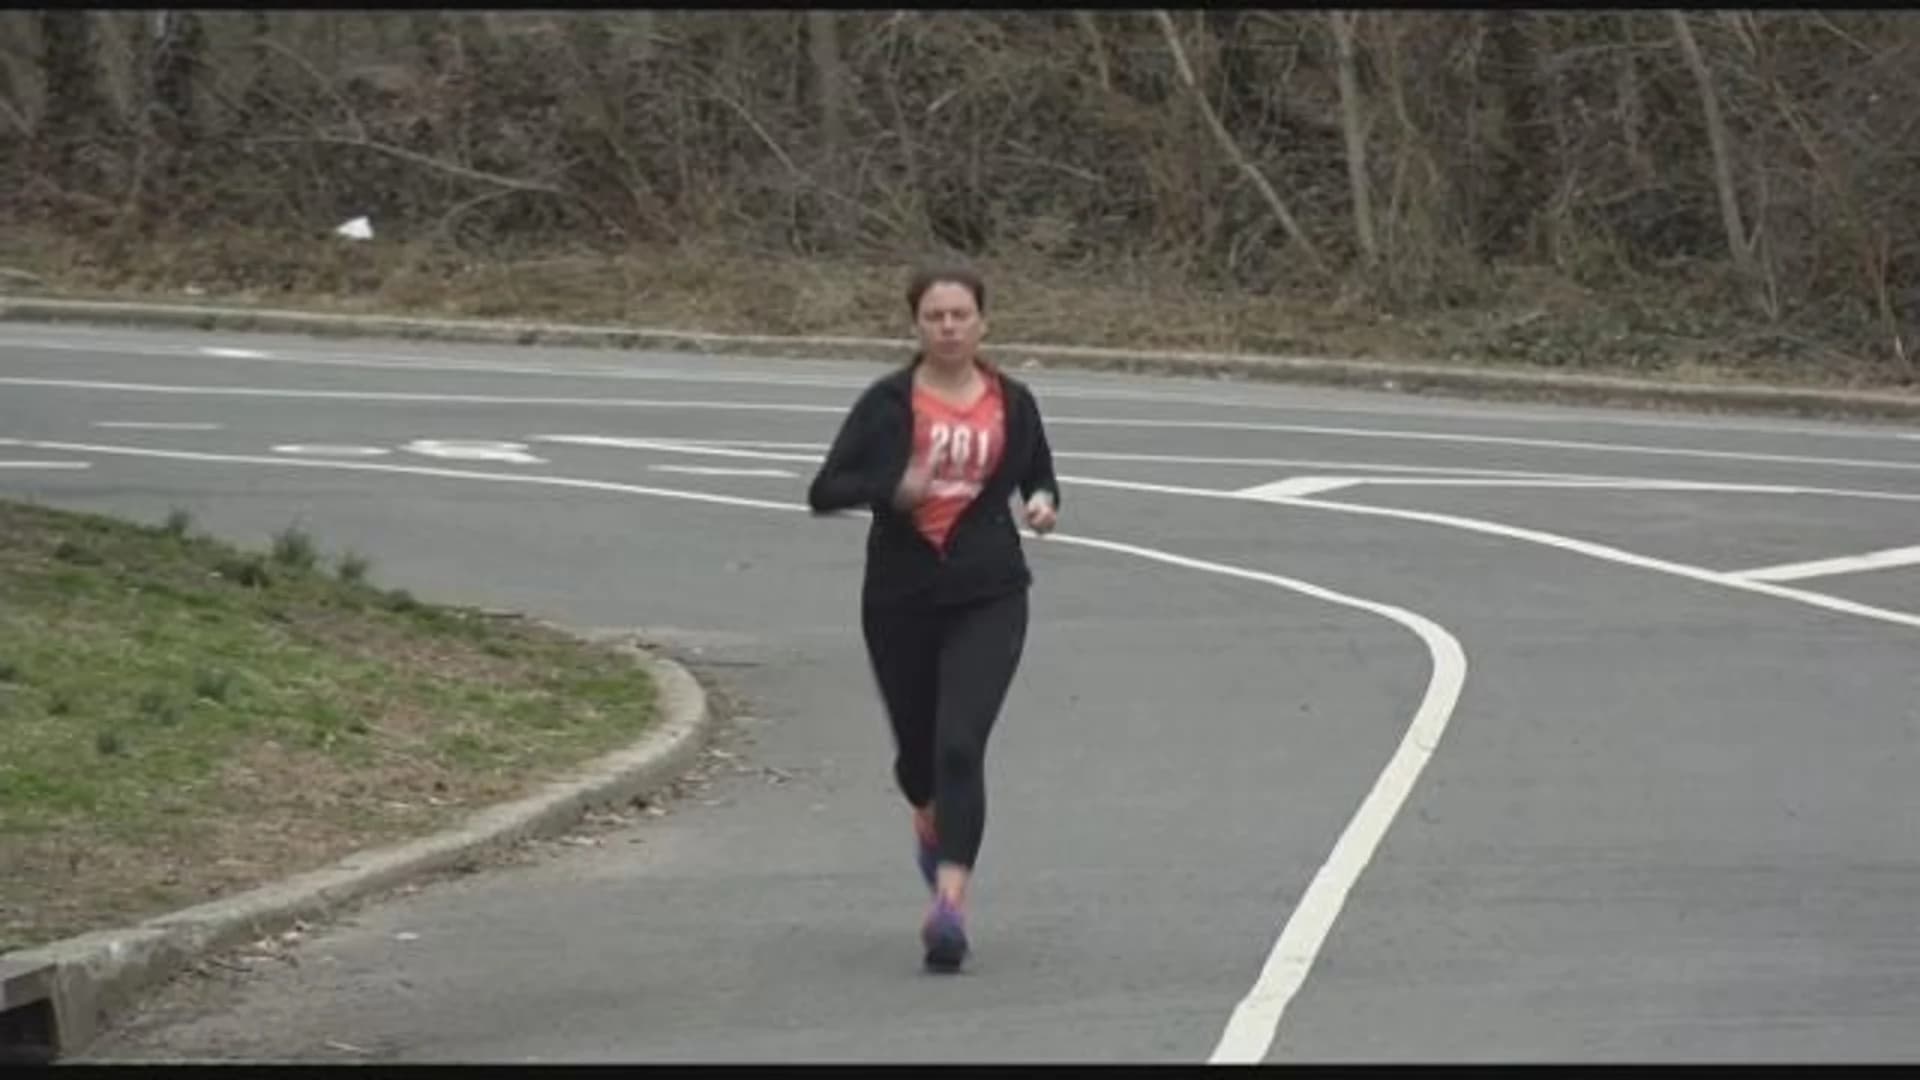 Prospect Park woman to run Boston Marathon for charity